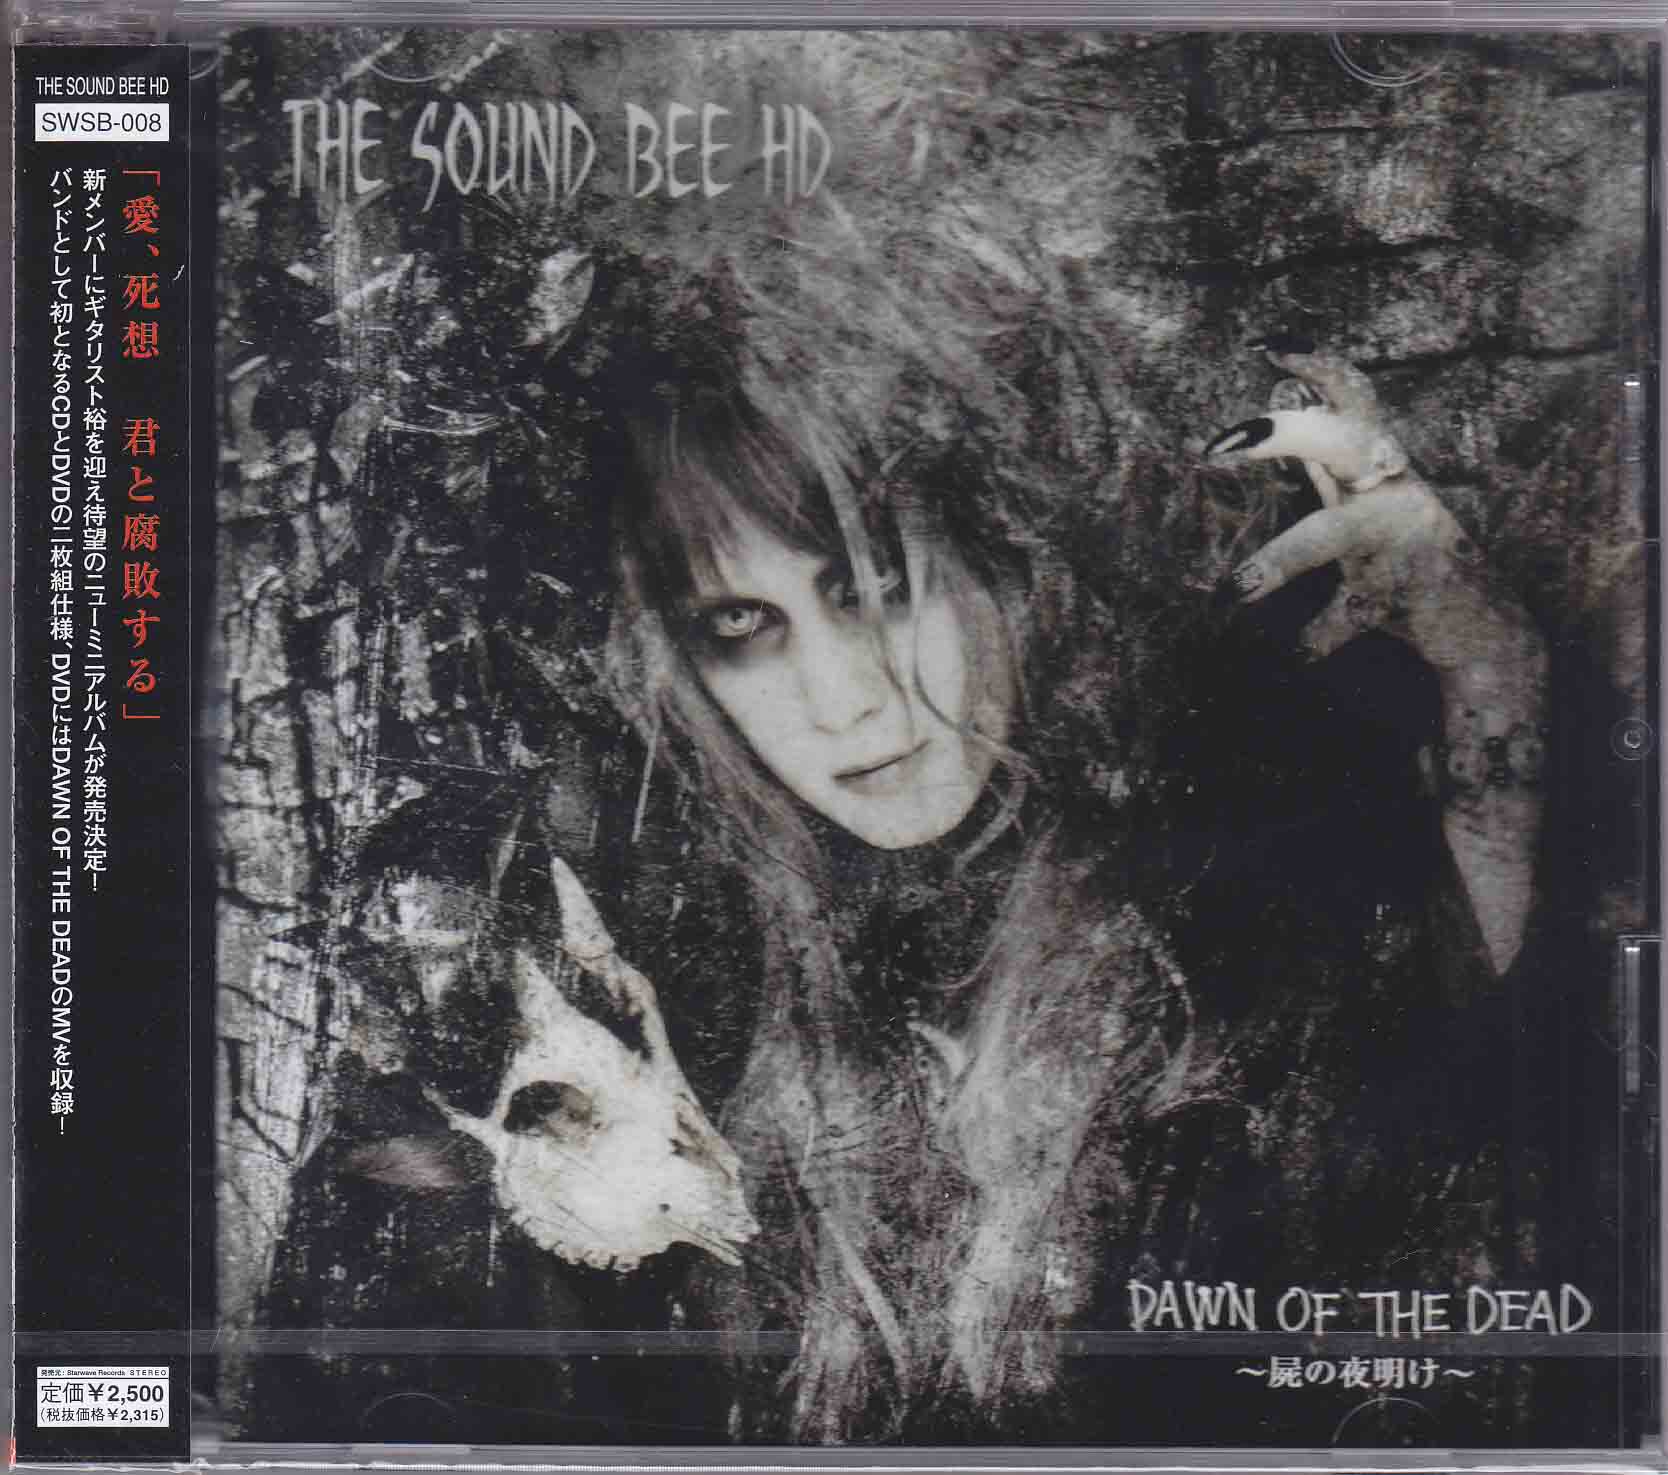 THE SOUND BEE HD ( ザサウンドビーエイチディー )  の CD DAWN OF THE DEAD ～屍の夜明け～